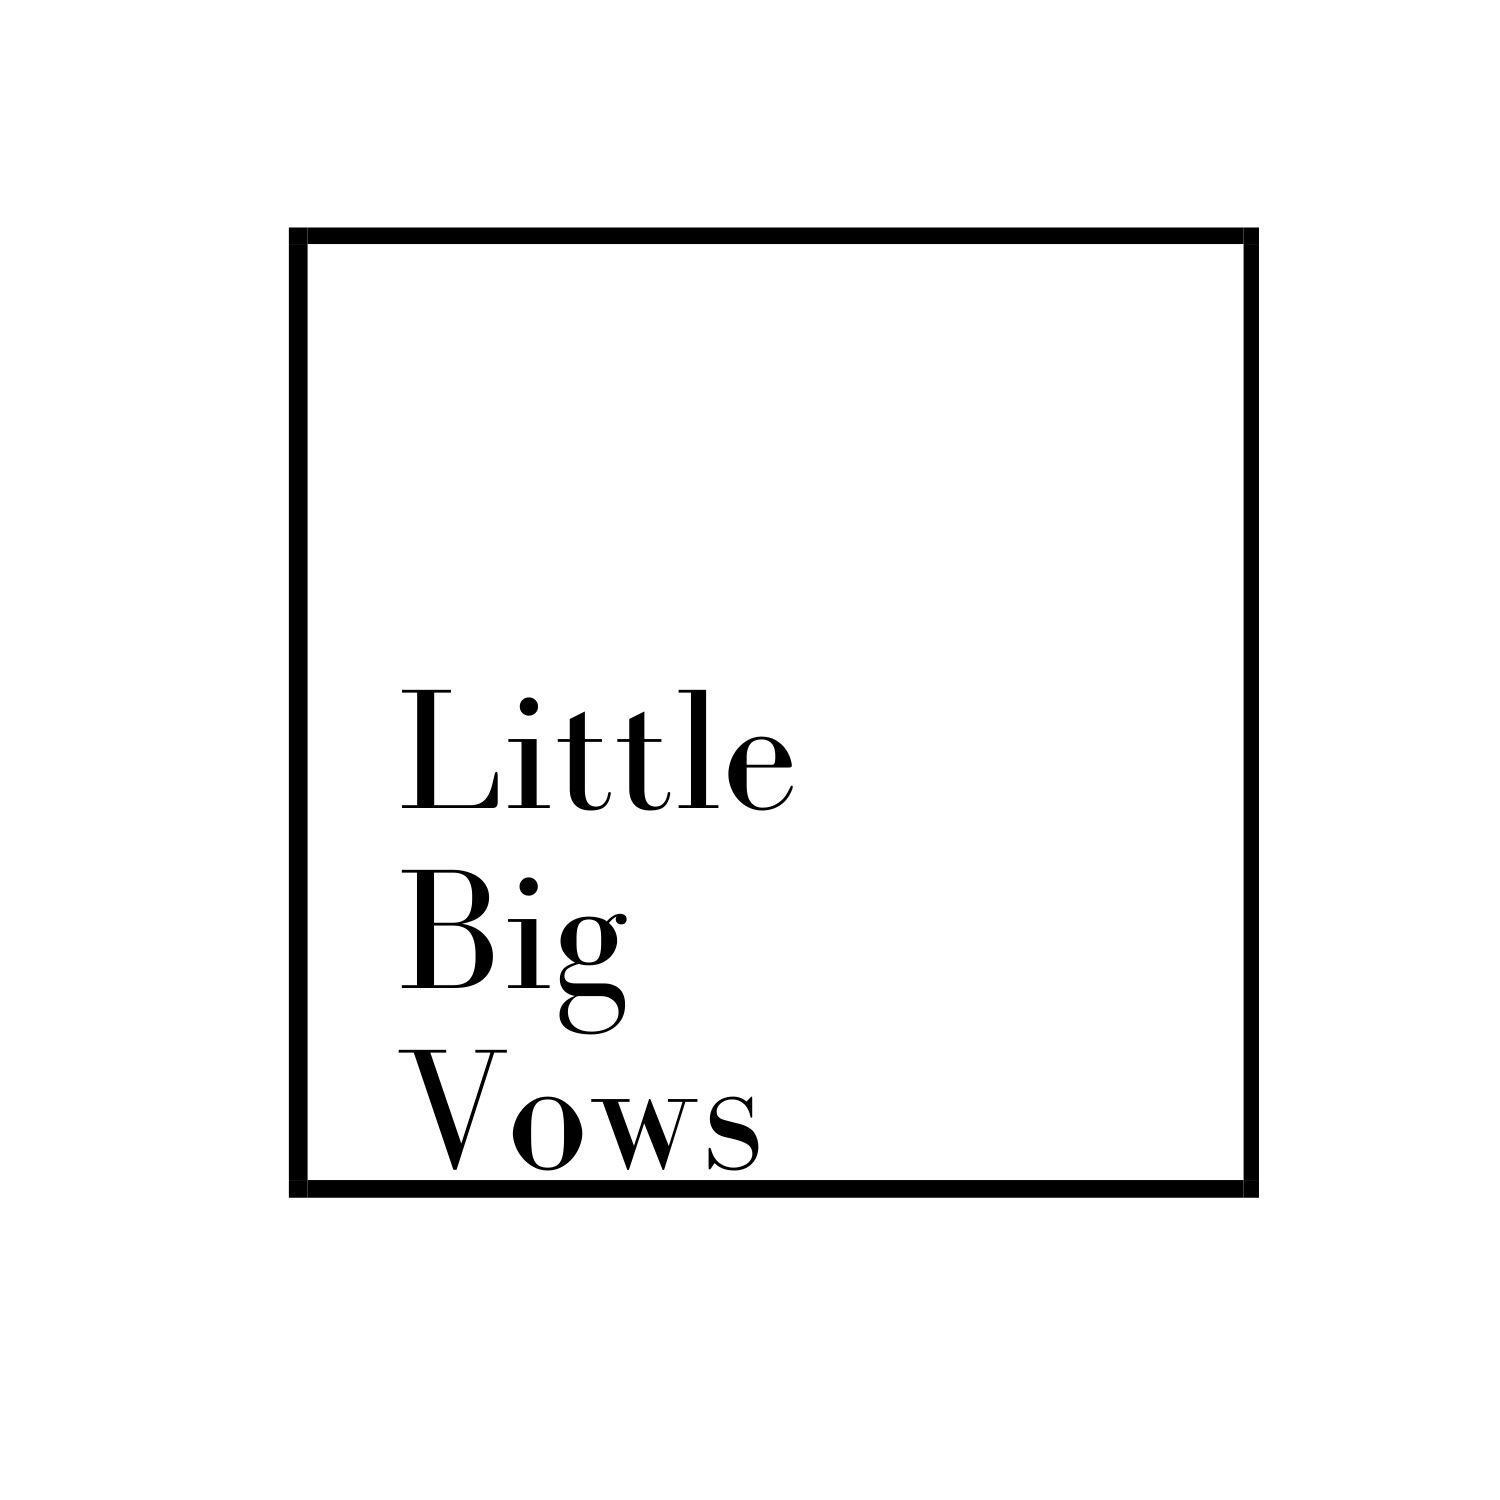  Little Big Vows